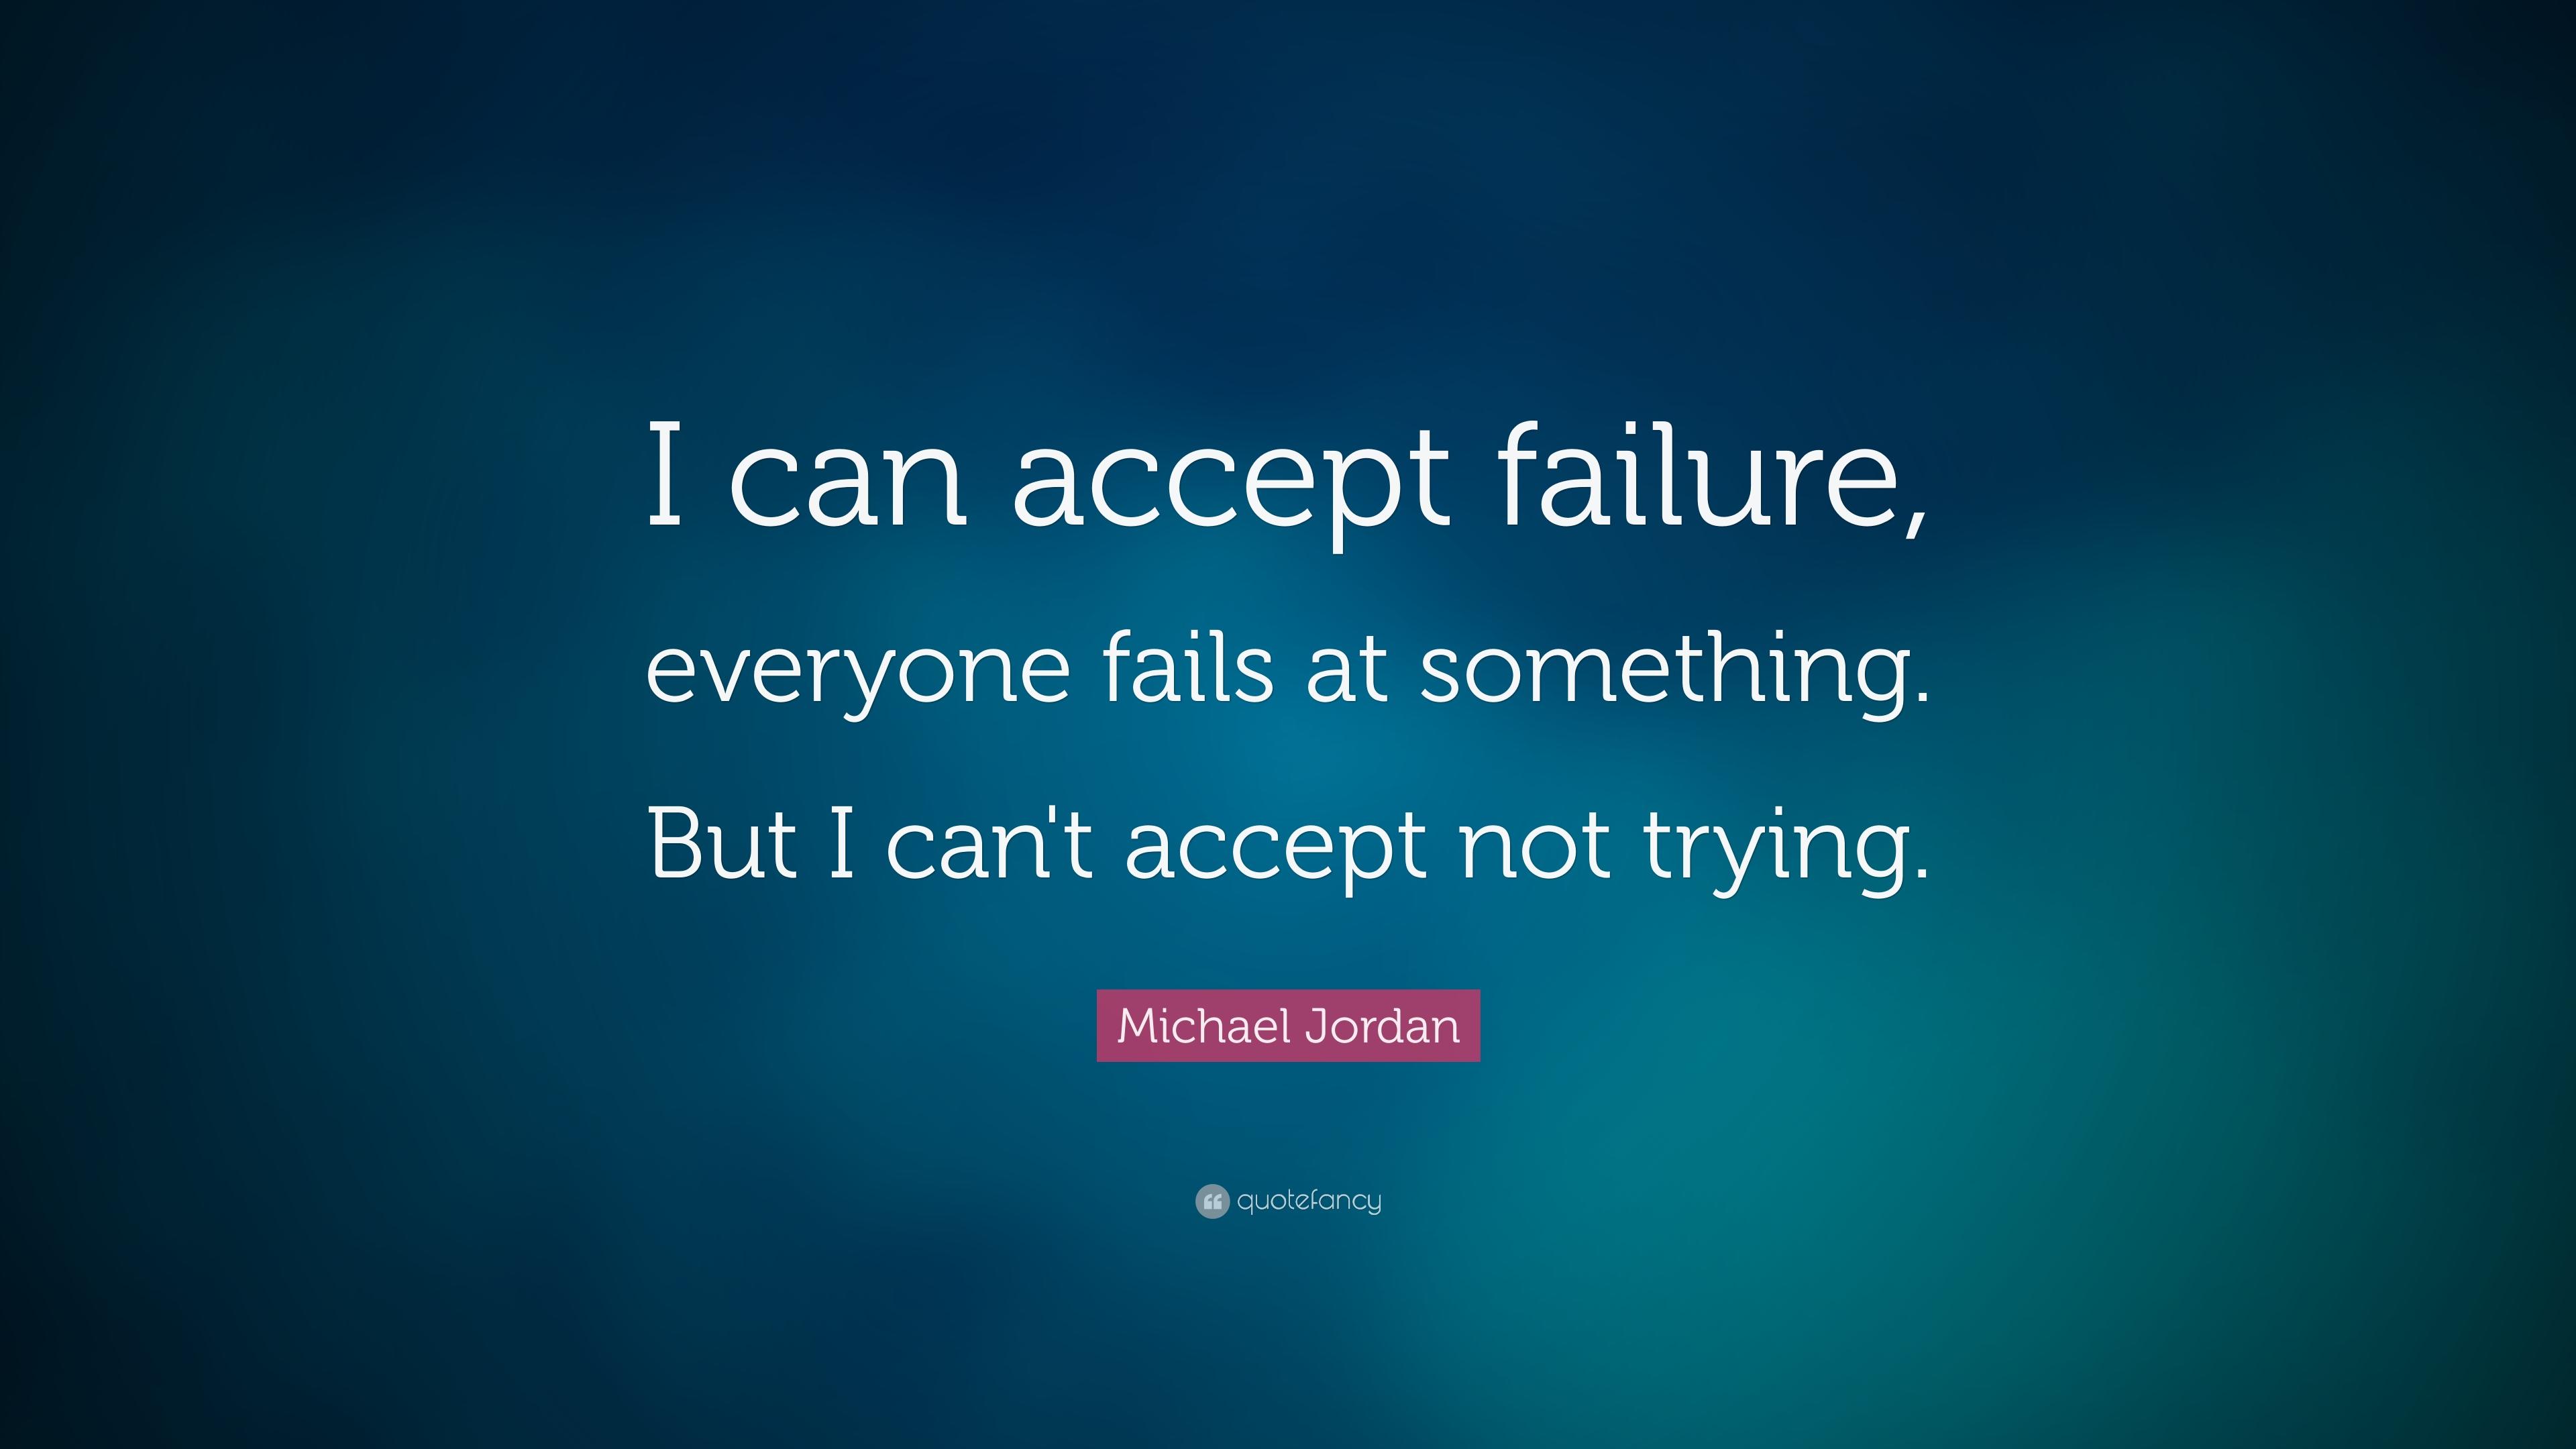 Michael Jordan Quote: “I can accept failure, everyone fails